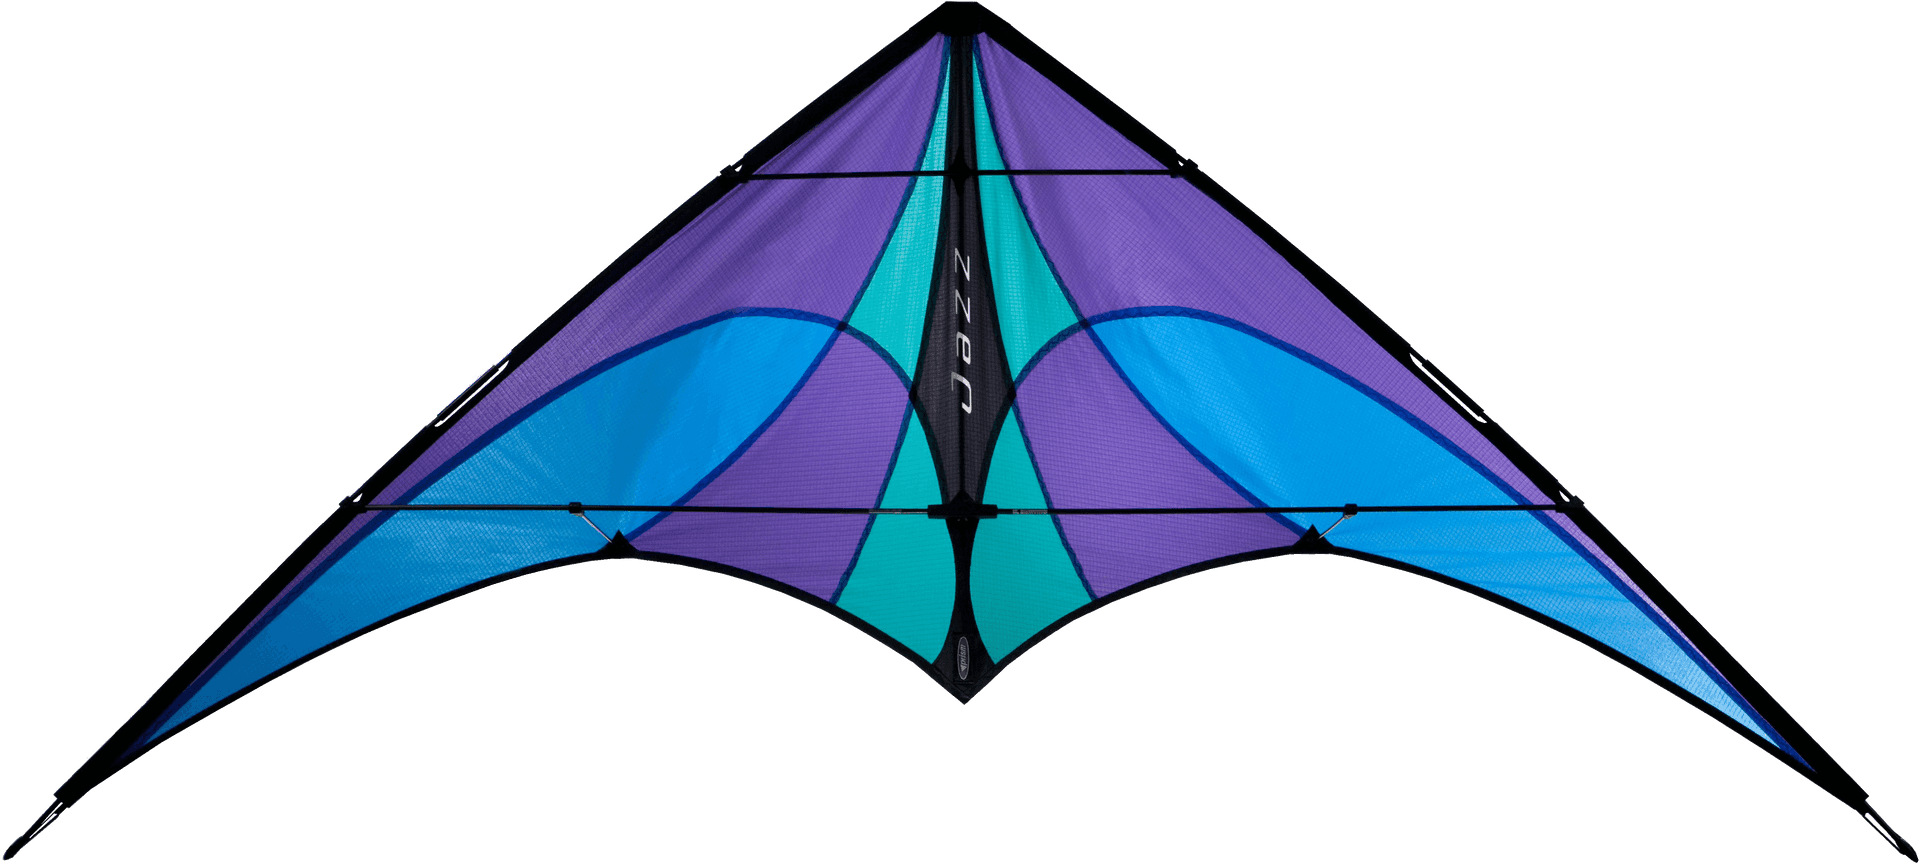 Colorful Stunt Kite Design PNG image